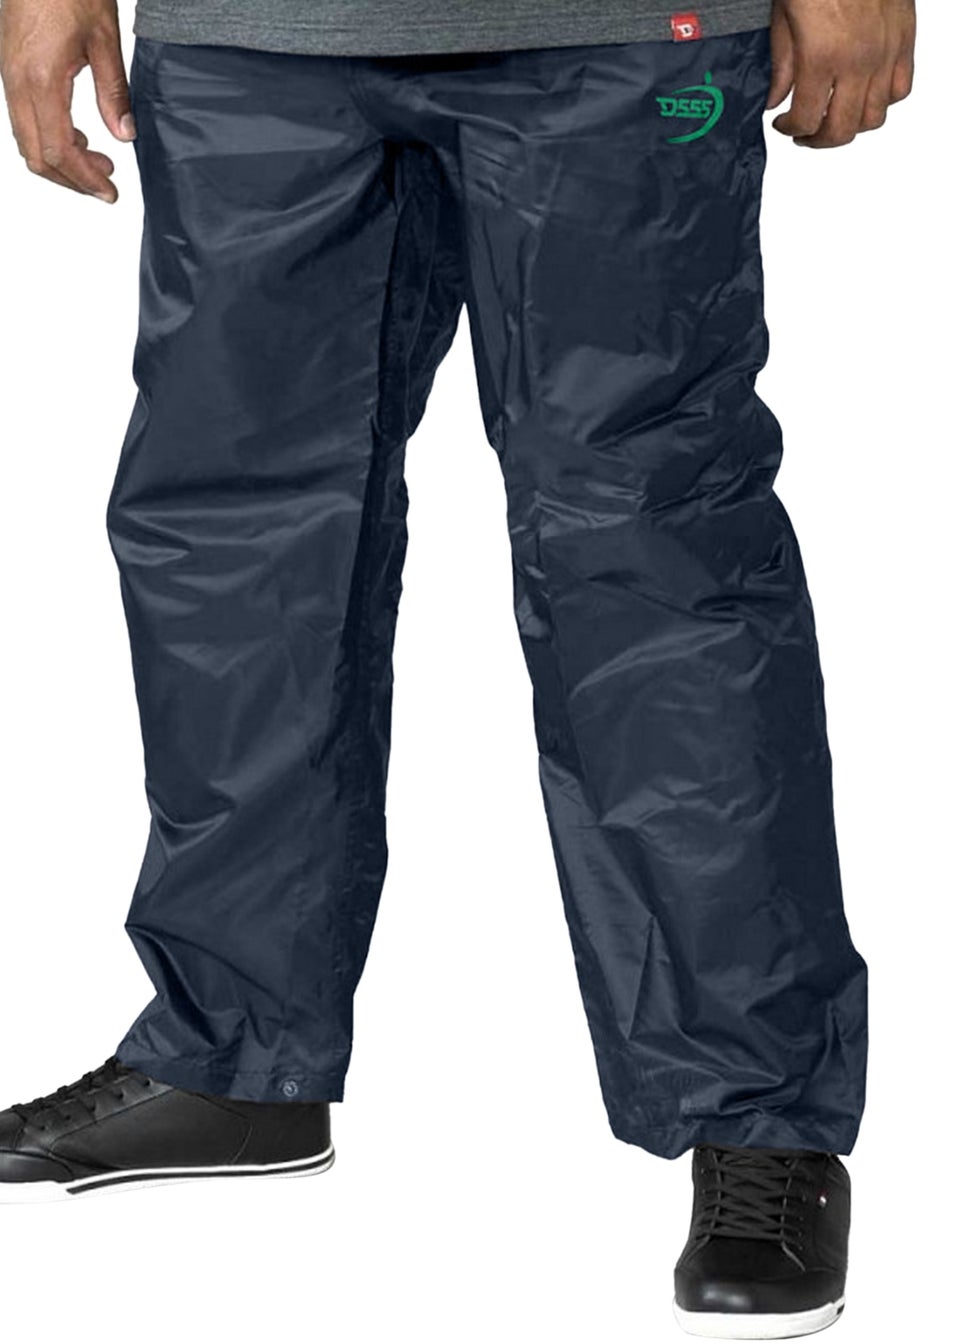 Duke Navy Elba Kingsize Packaway Rain Over Trousers